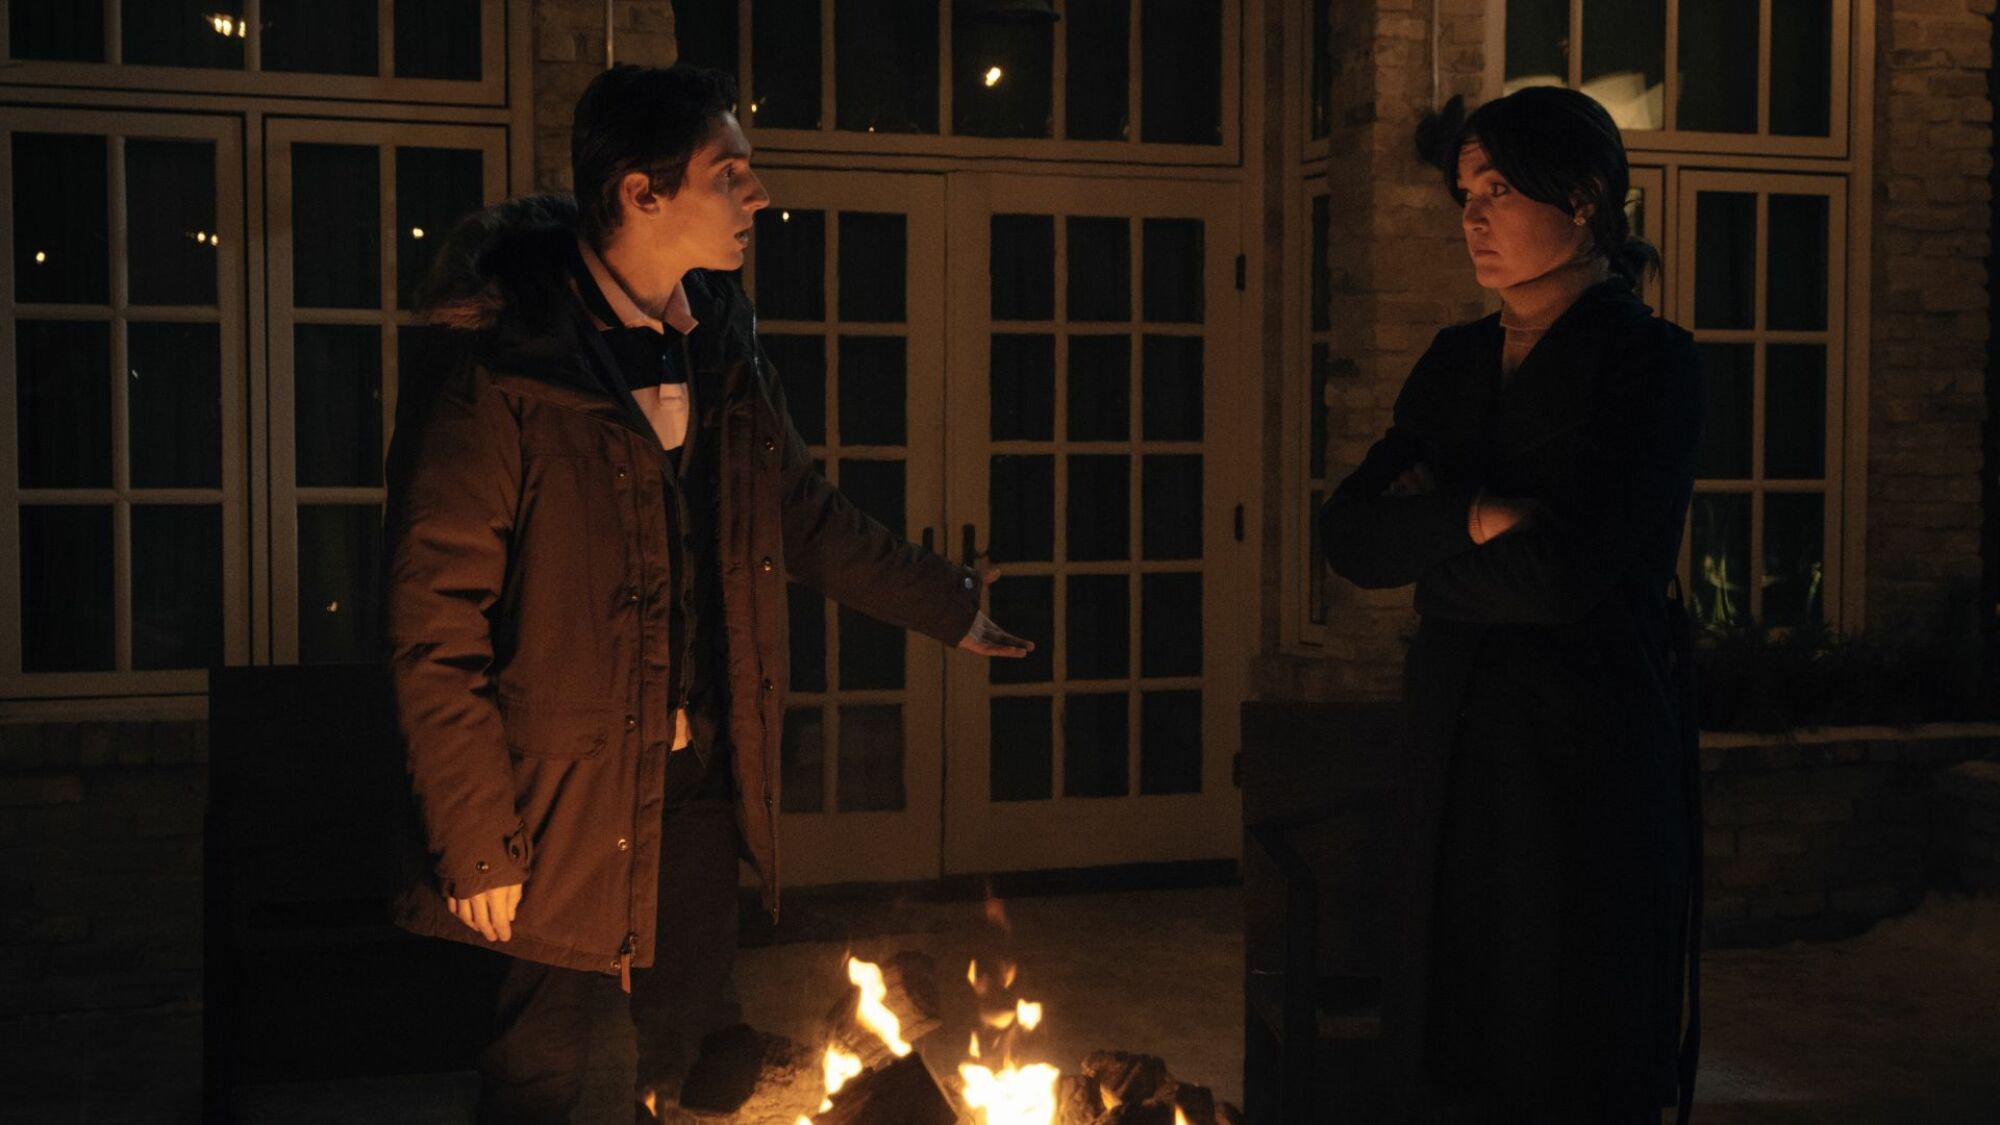 Matthew Finlan as Gunnar Albright and Julia Stiles as Tricia Albright in "Orphan: First Kill." 